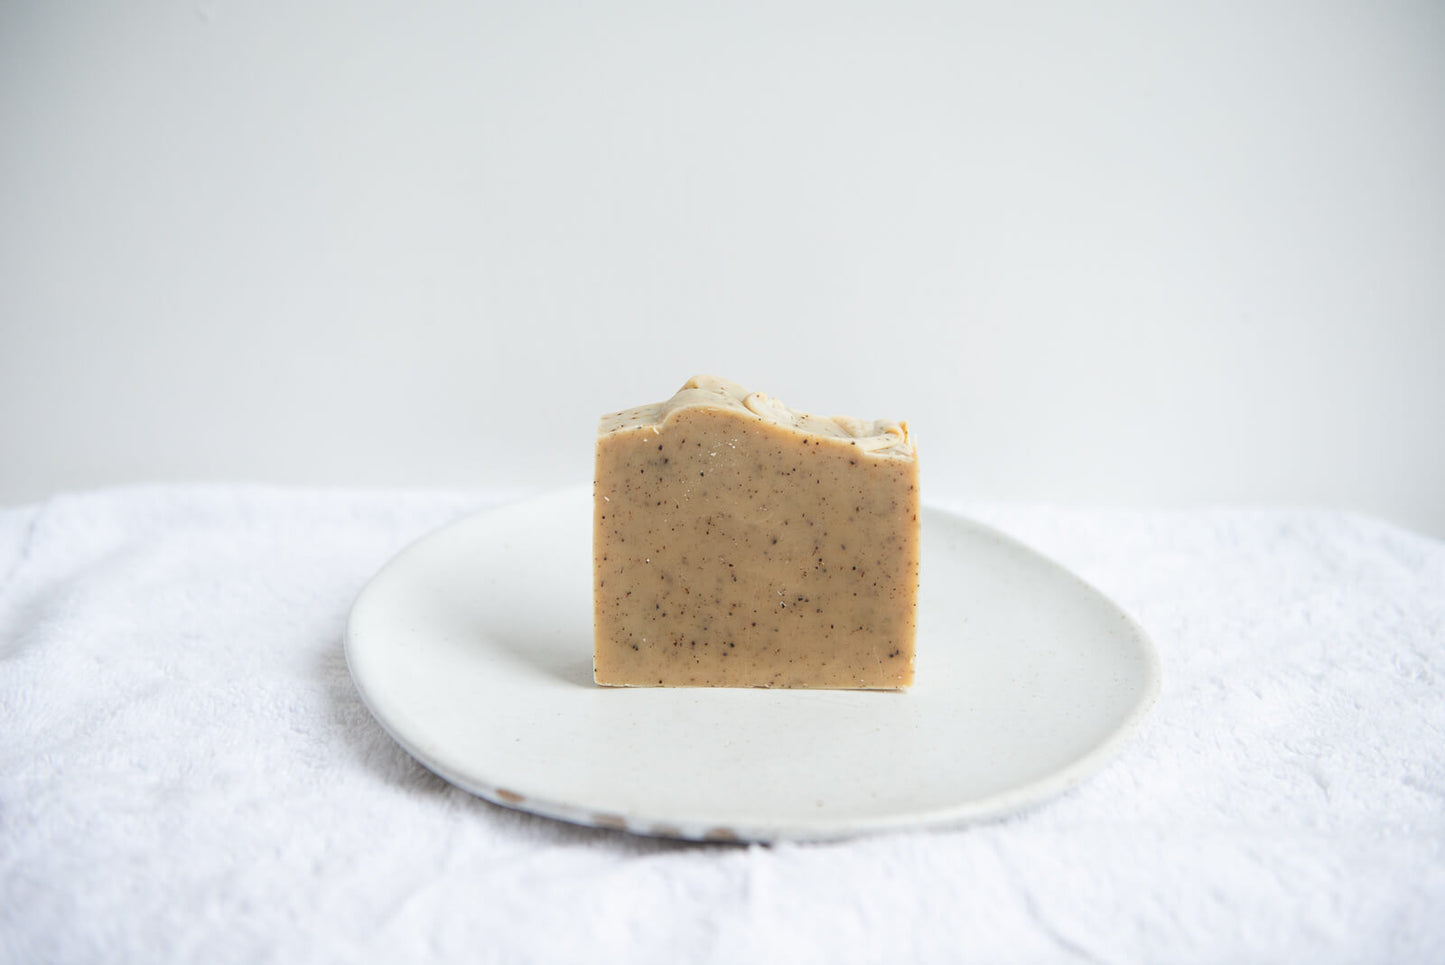 Natural Soap | Handmade in Australia | Gather + Harvest | Lemon Myrtle & Mountain Pepper Leaf | Buy online